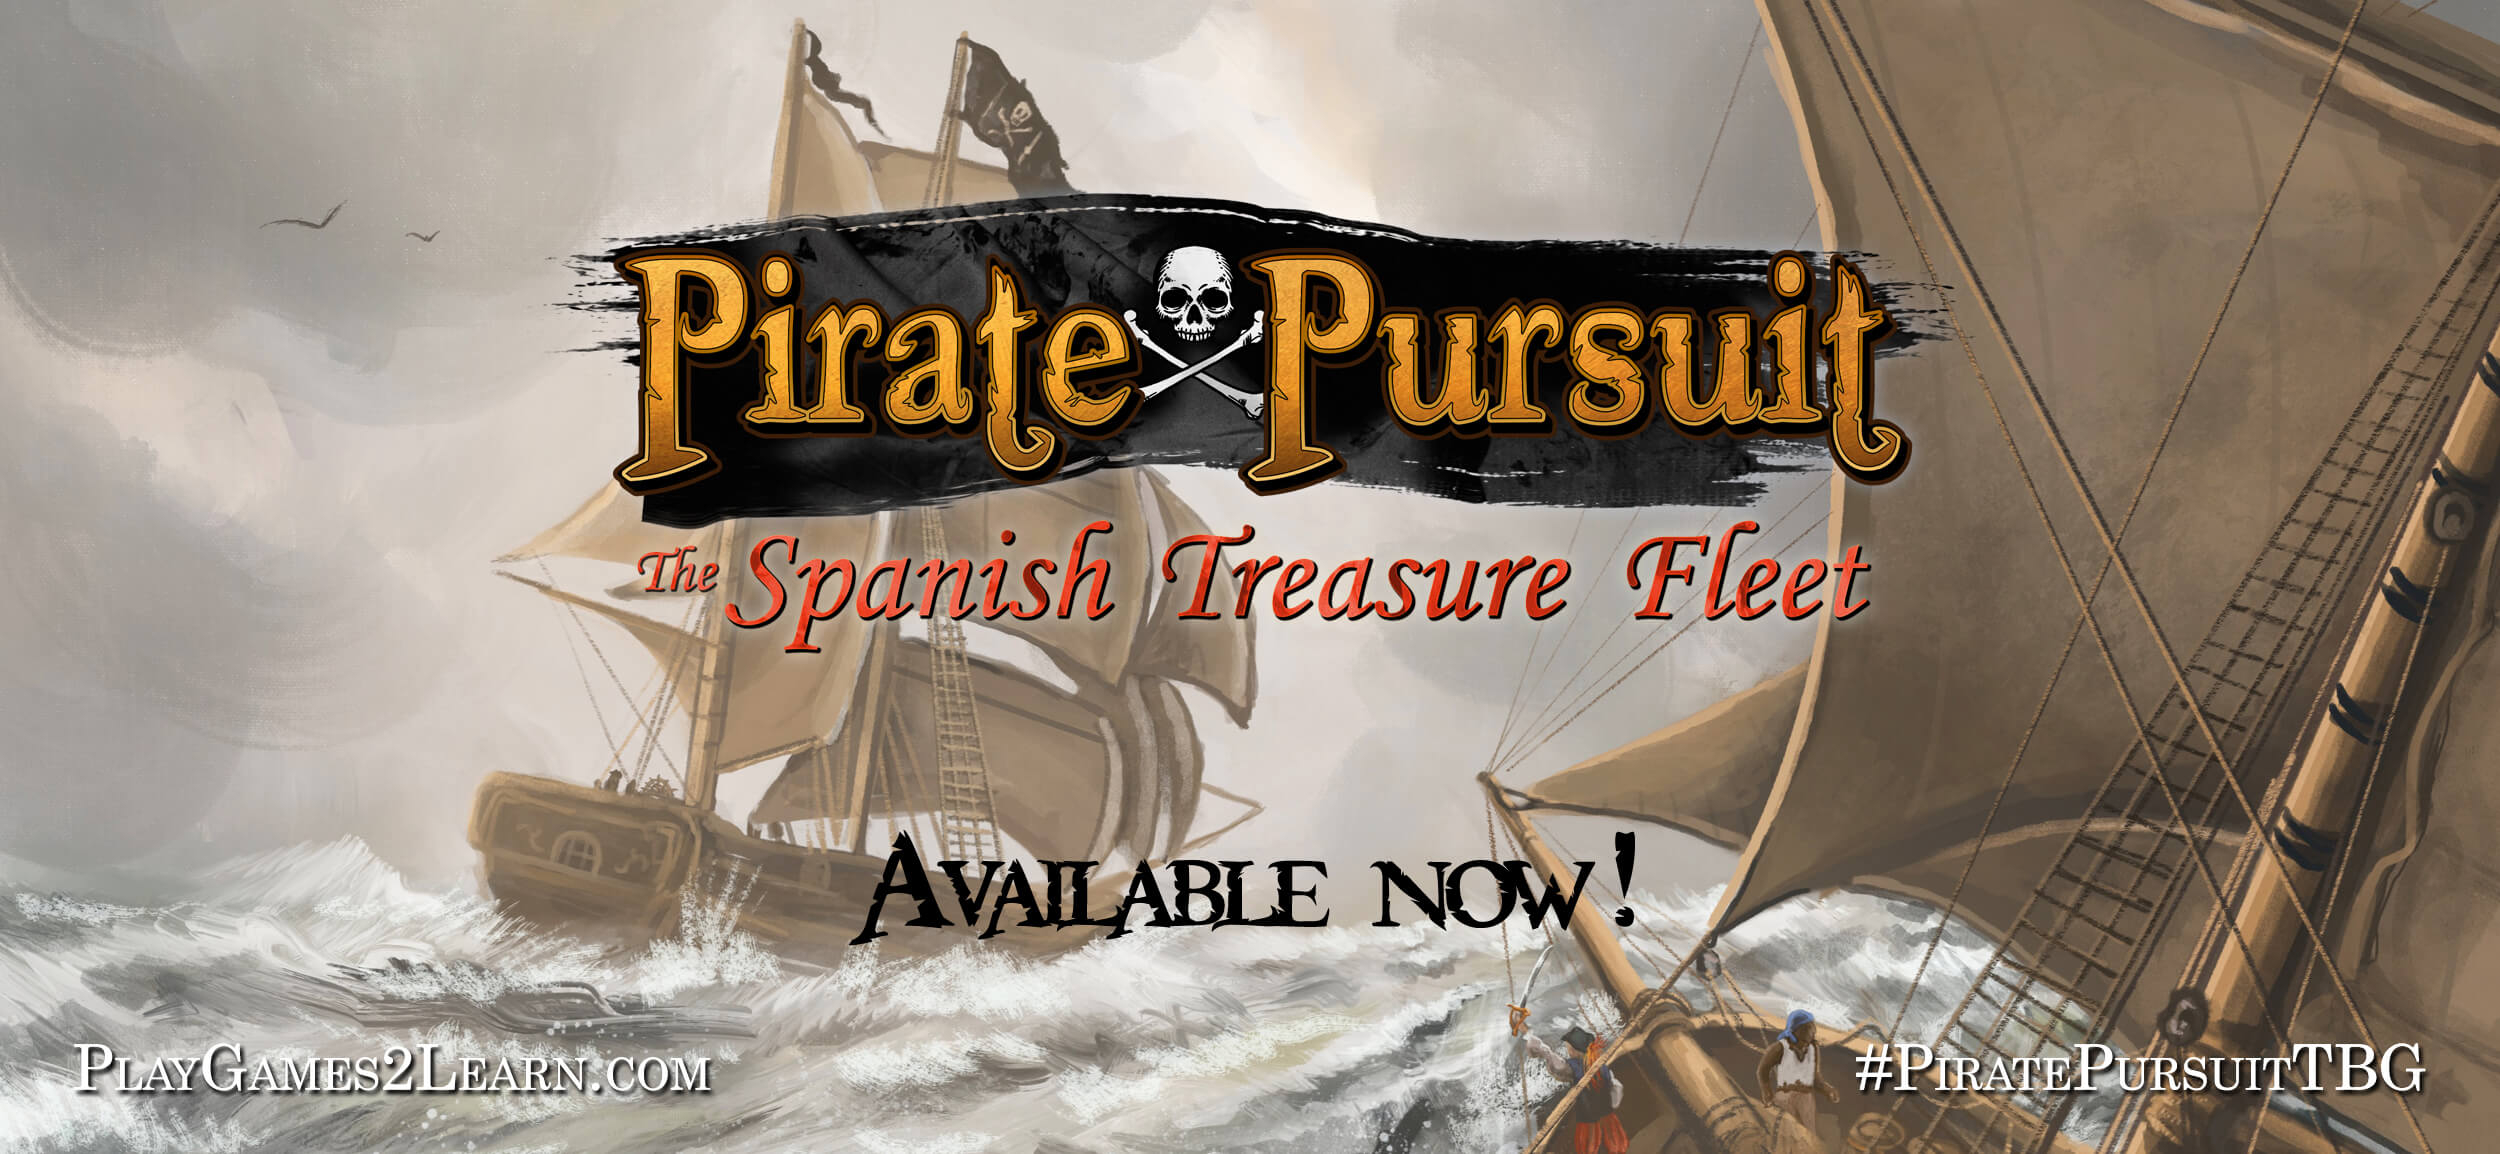 PlayGames2Learn.com: Pirate Pursuit - The Spanish Treasure Fleet